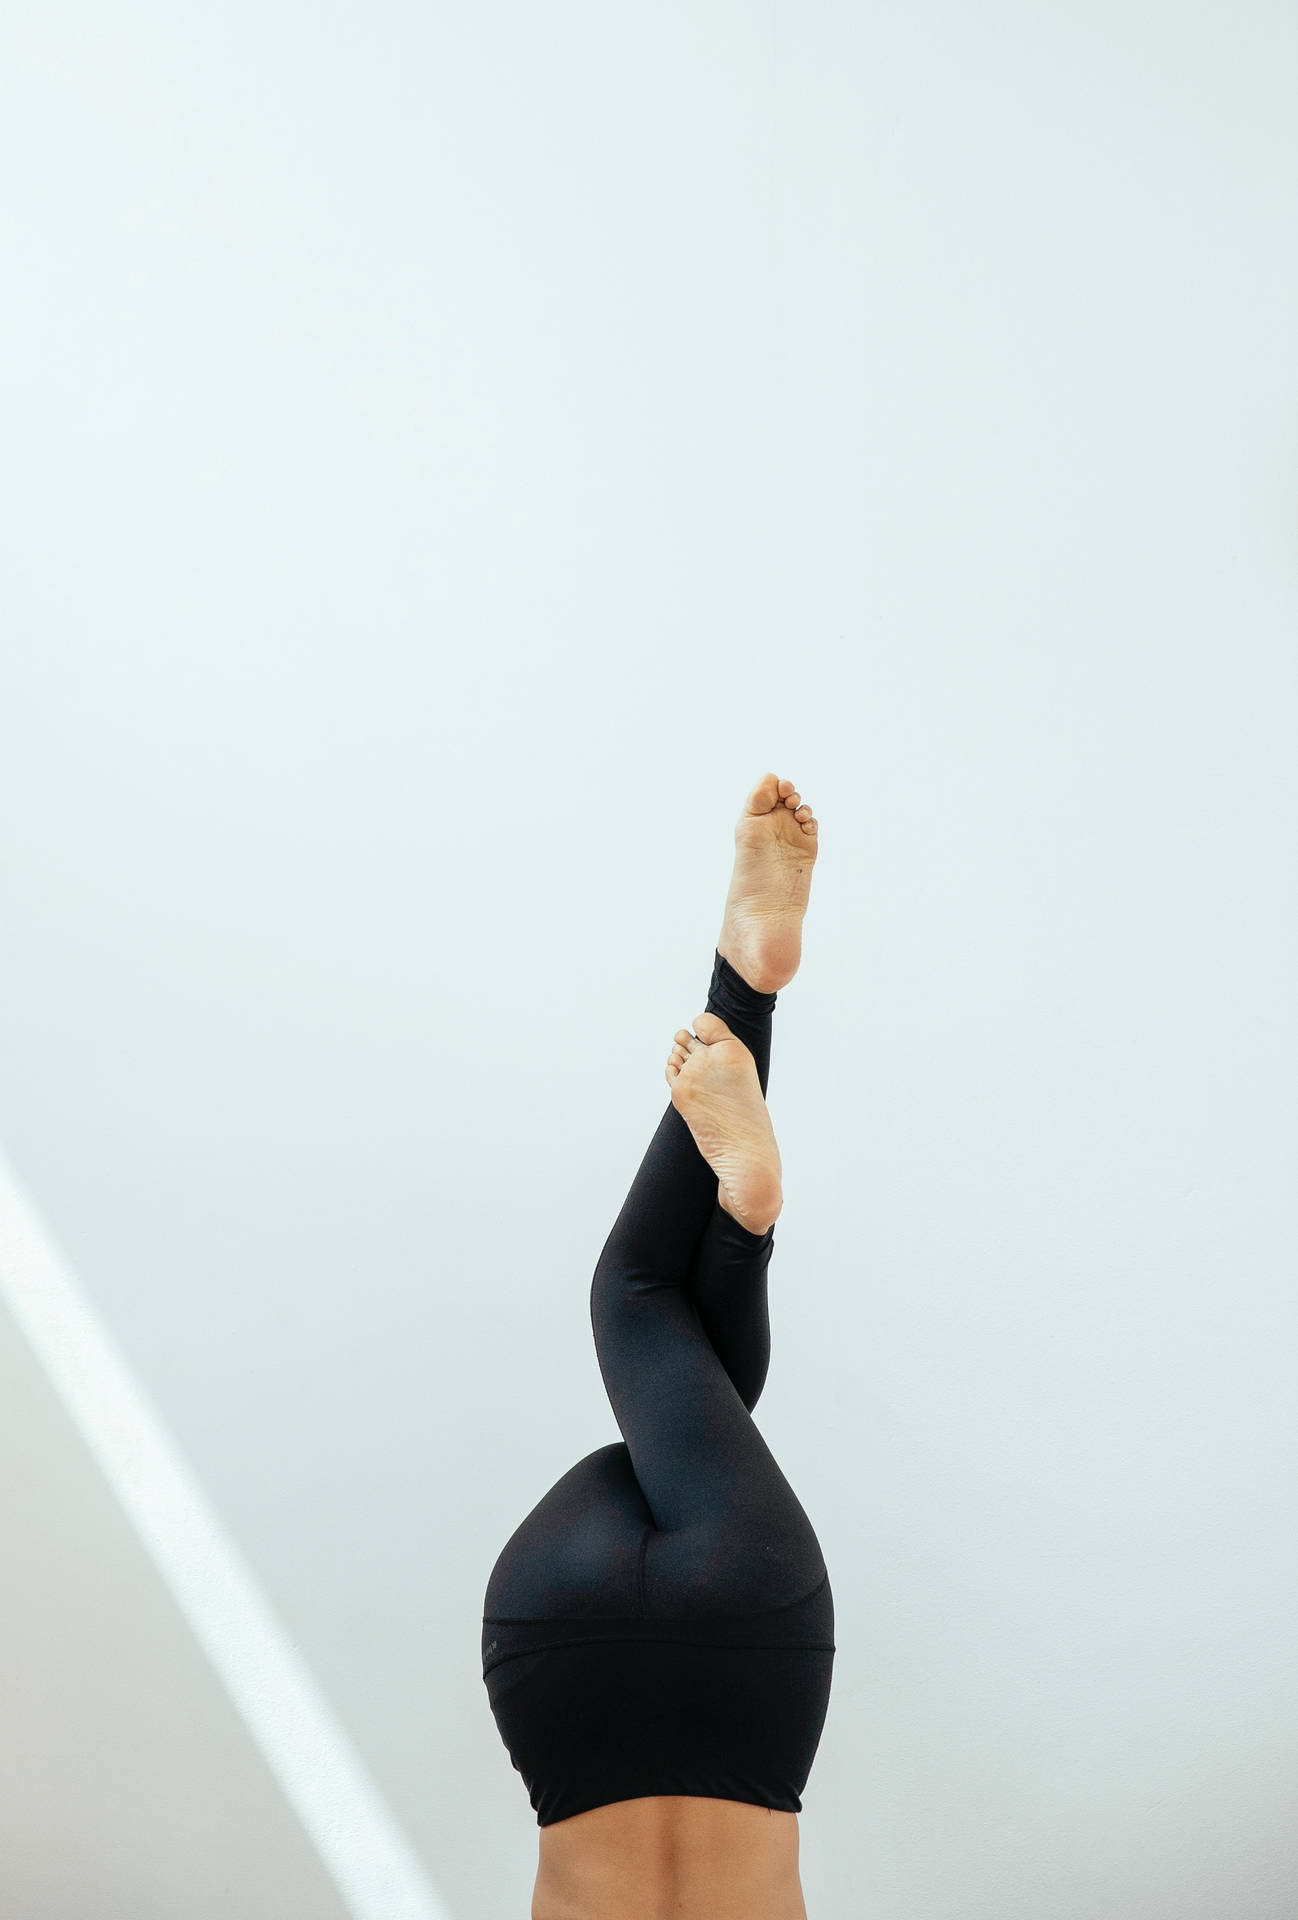 Lower Body Practicing Balance Wallpaper